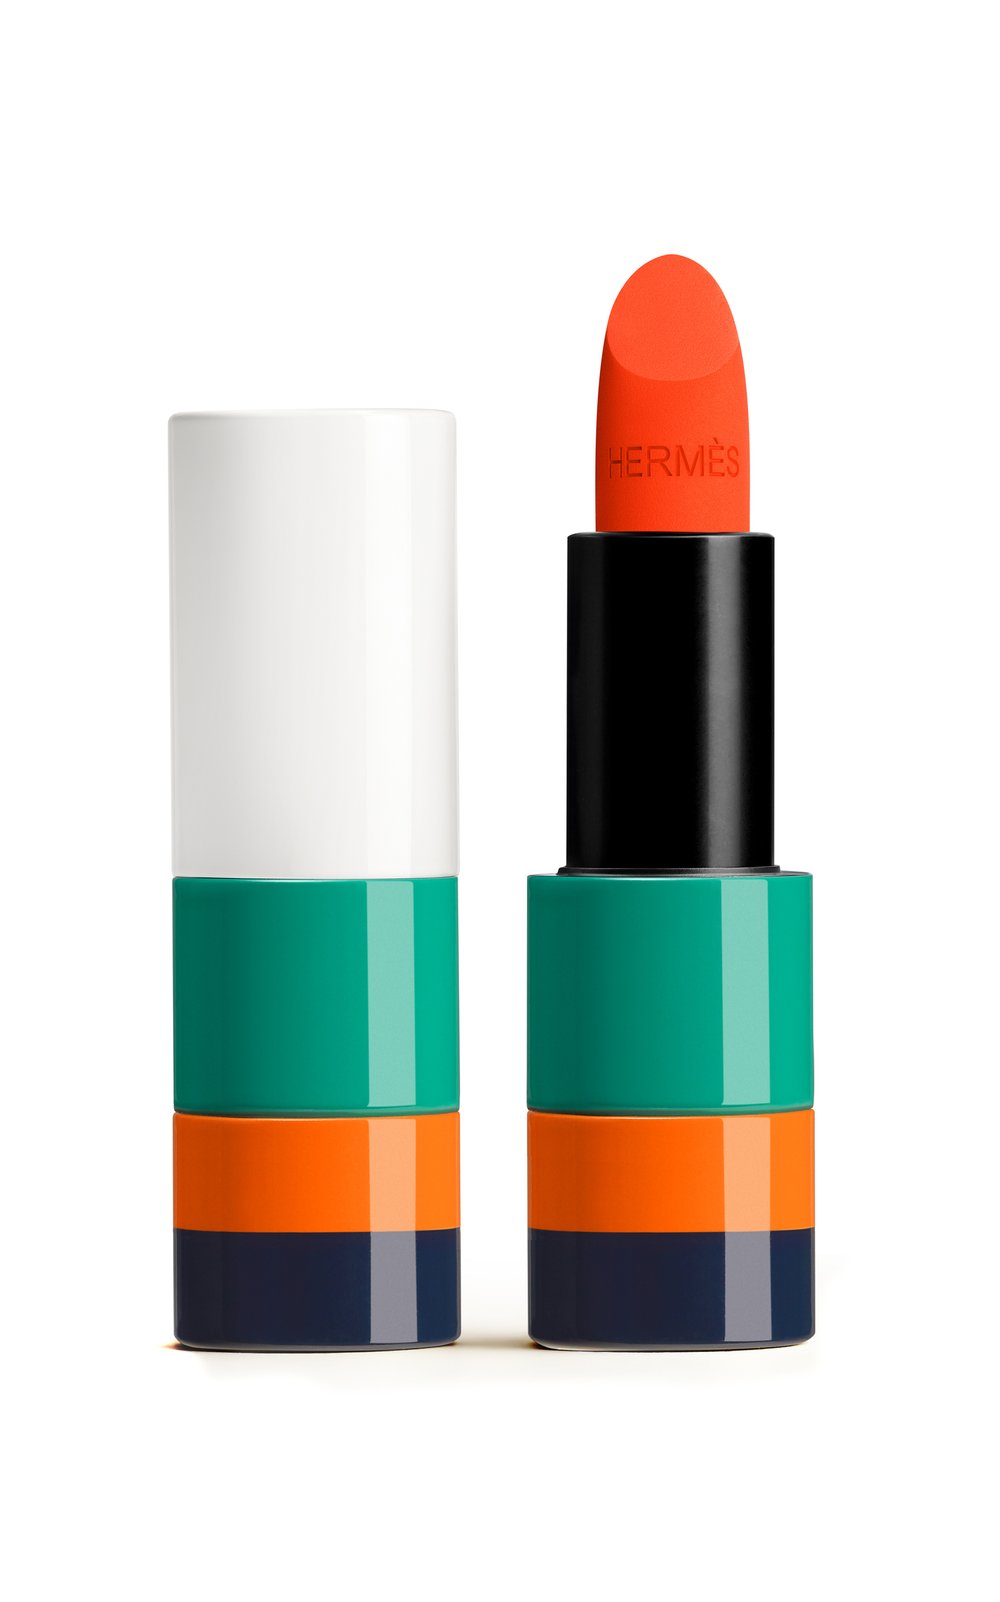 hermes-2-coral-rouge-hermes-matte-lipstick-limited-edition-orange-neon.jpg